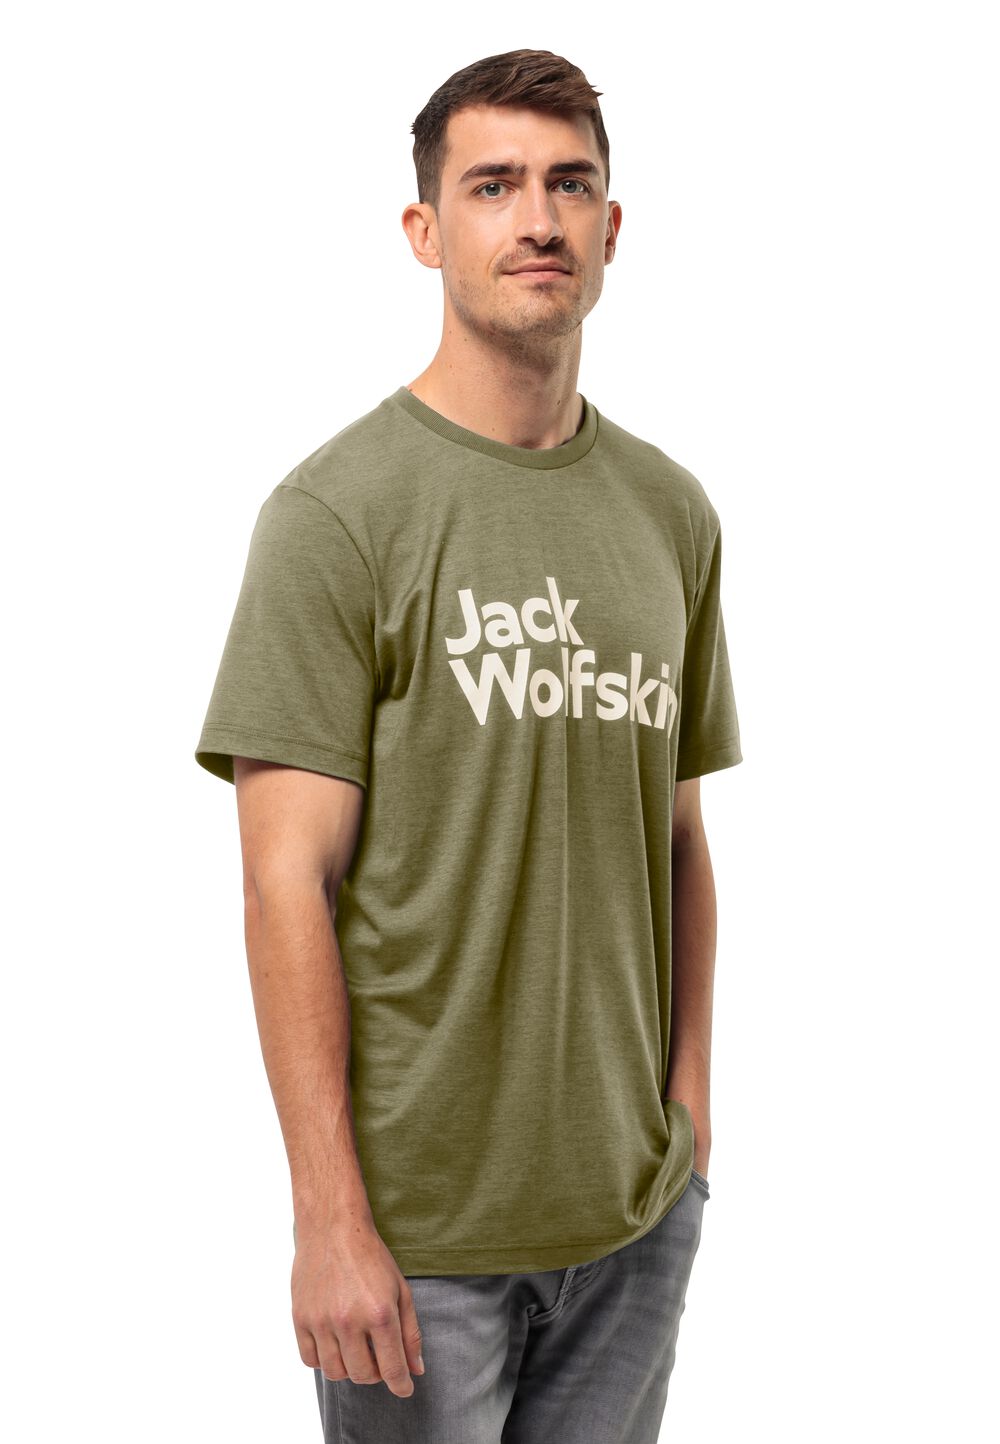 Jack Wolfskin Brand T-Shirt Men Functioneel shirt Heren M bruin bay leaf